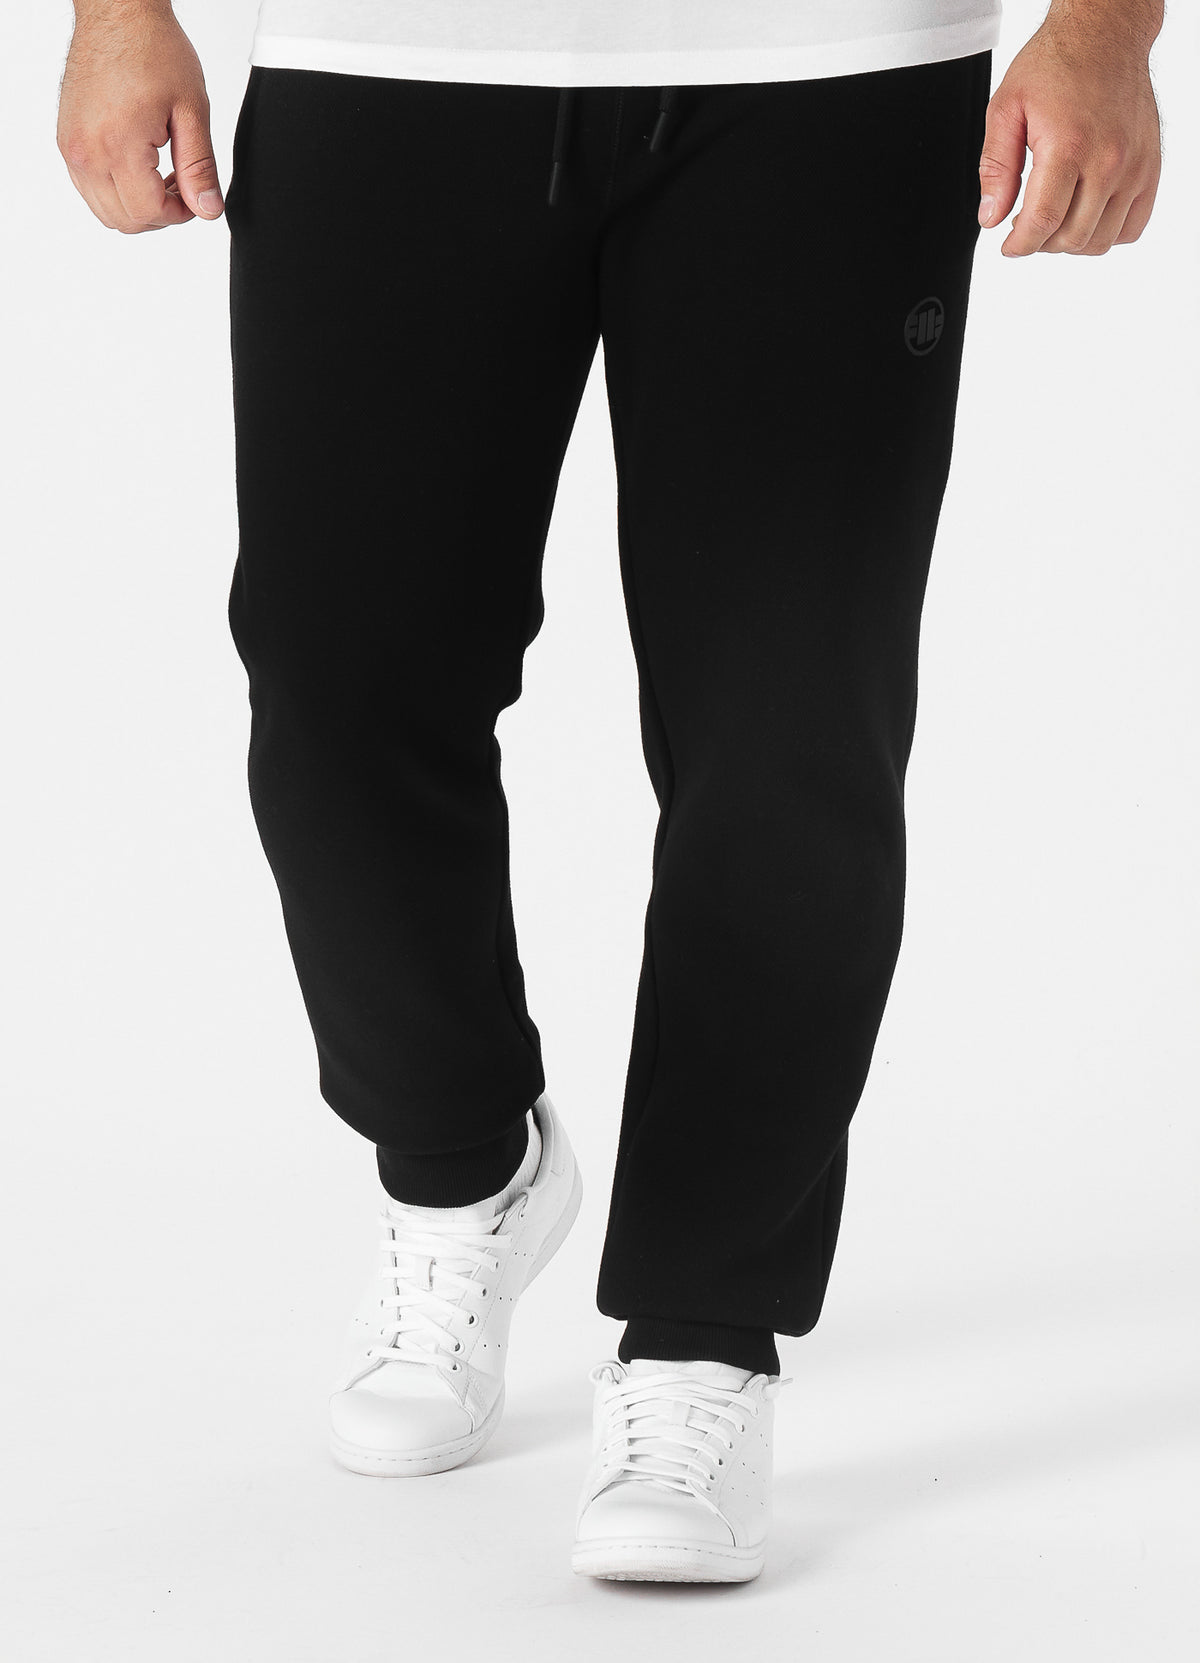 NEW LOGO Premium Pique Black Track Pants - Pitbull West Coast International Store 